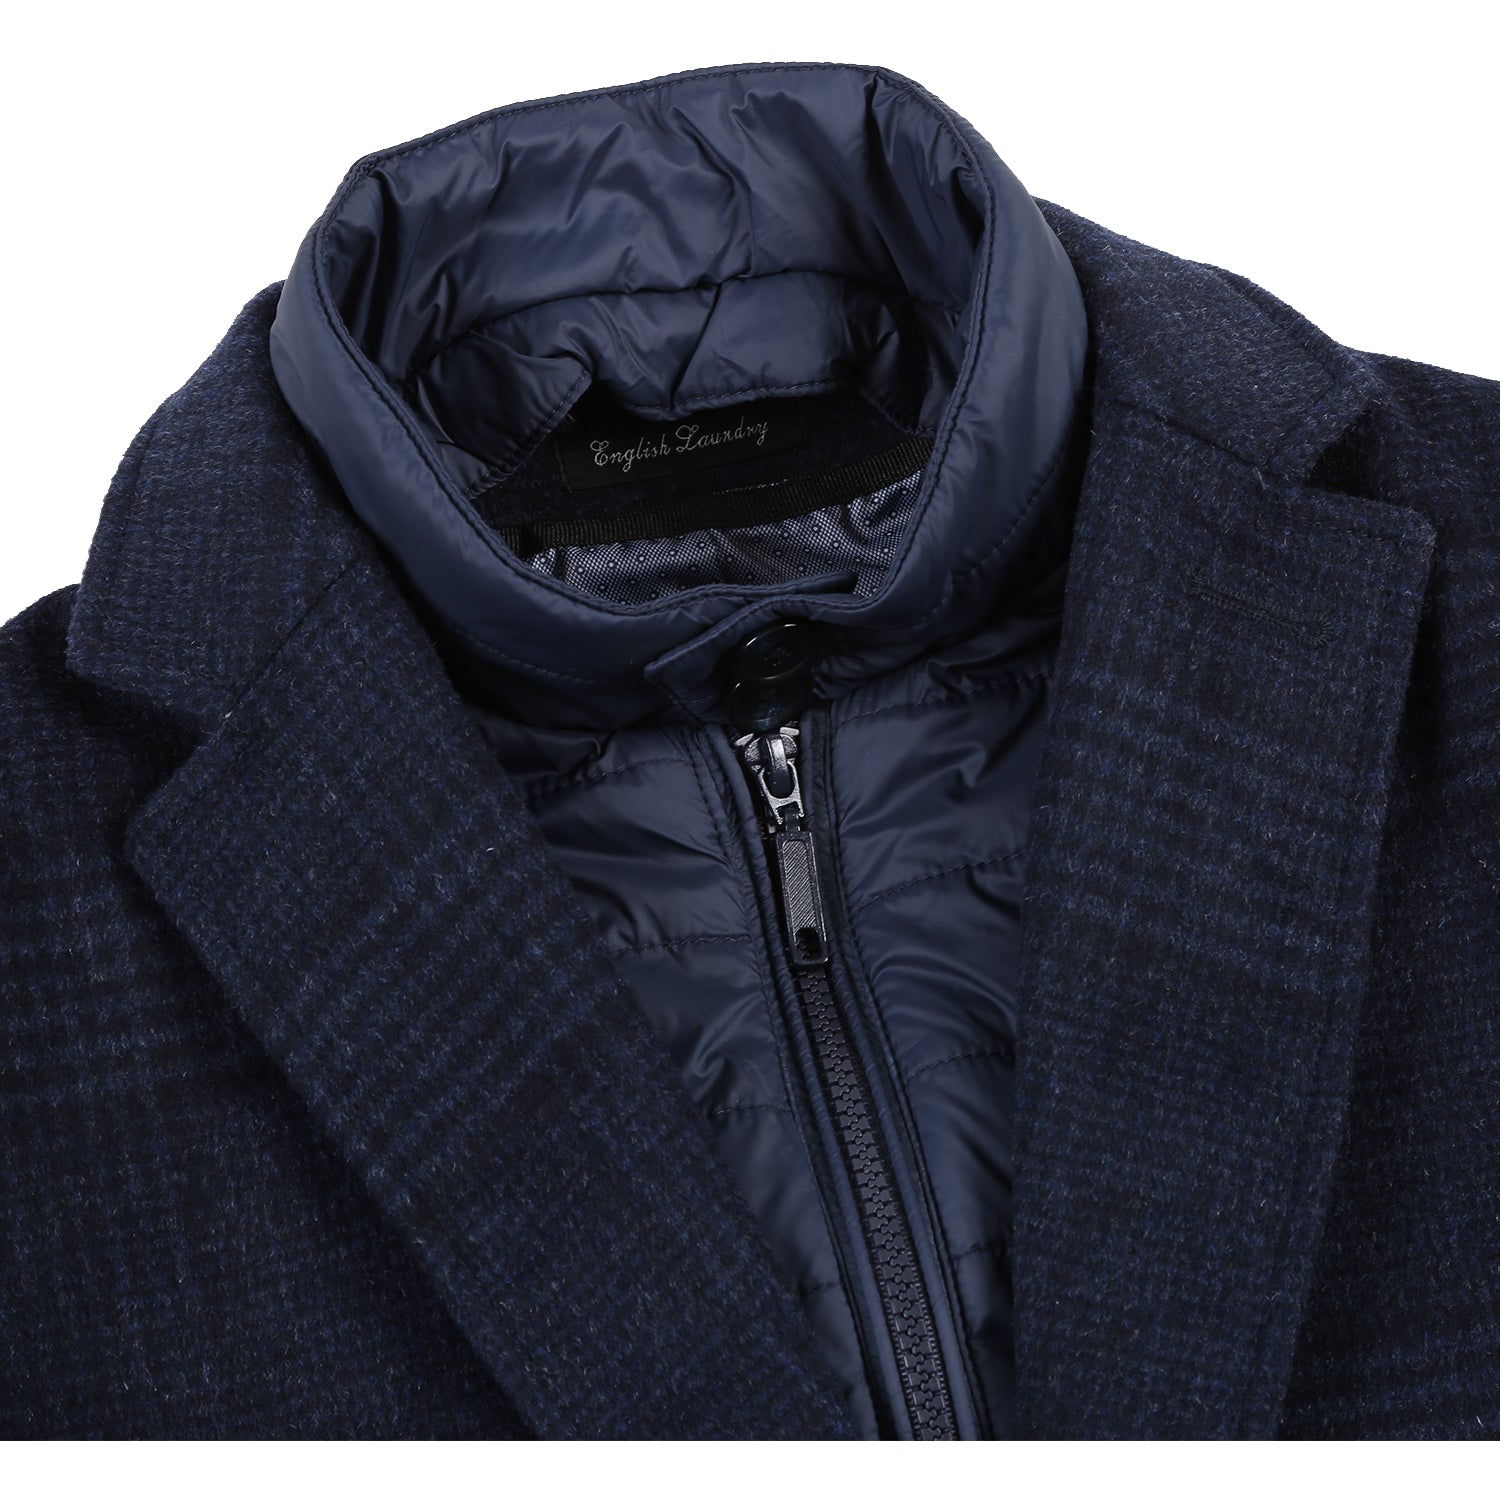 English Laundry Wool Blend Breasted Gray Blue Top Coat BIB 3